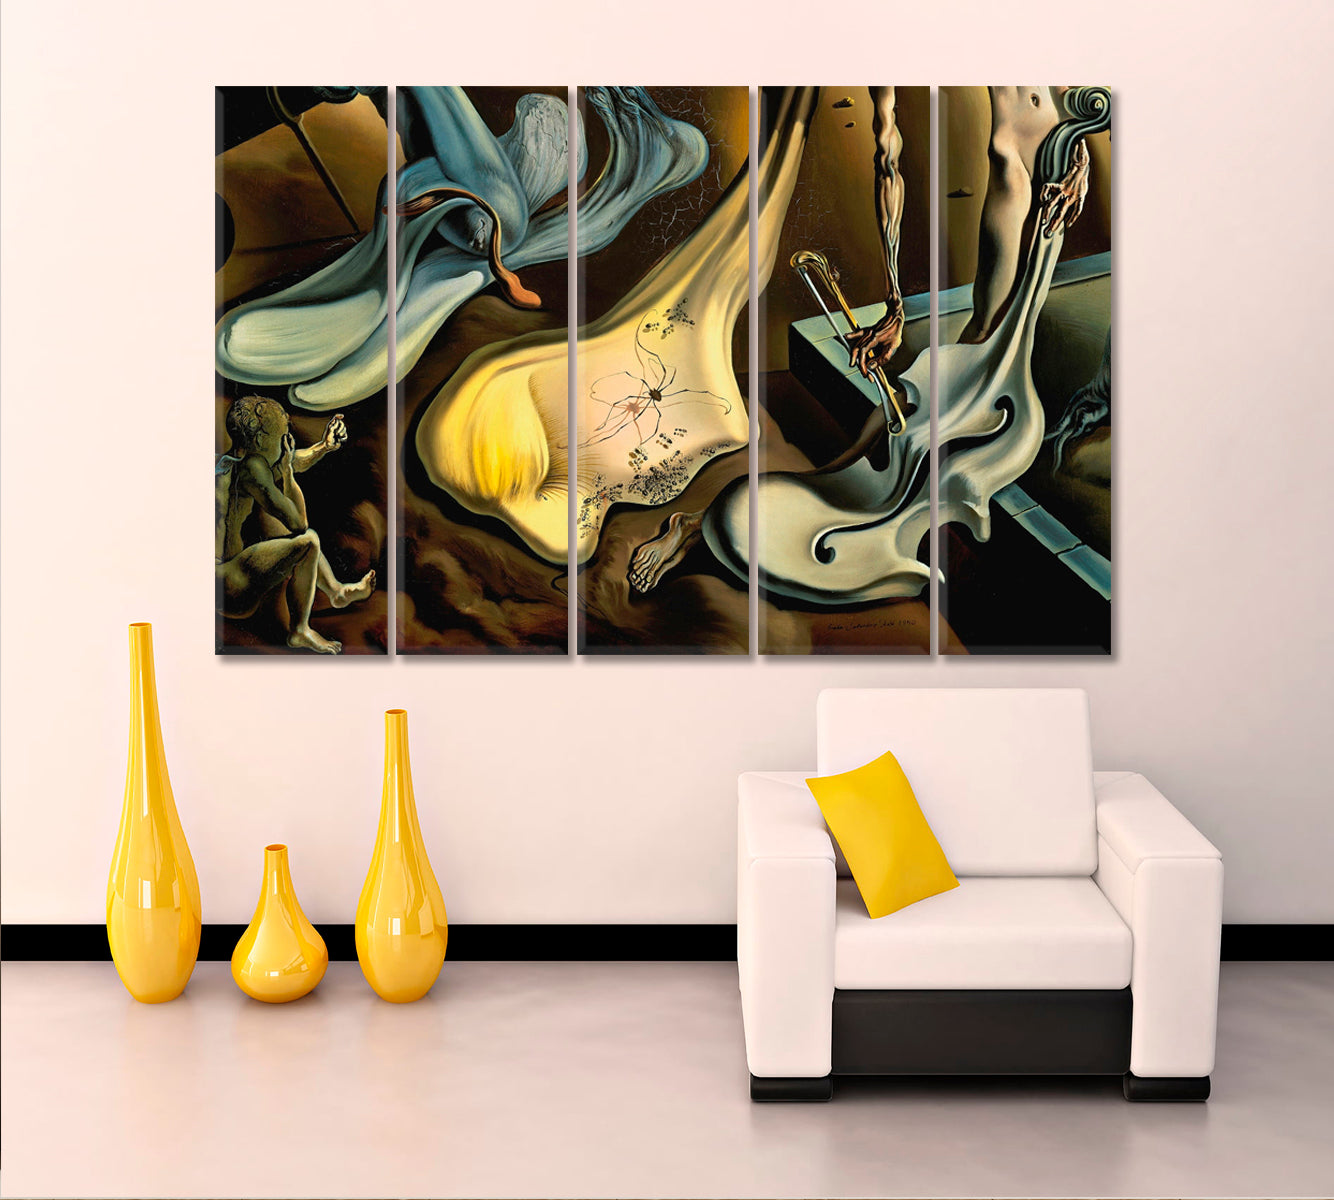 Inspirid by Salvador Dali Surreal Abstract Modern Artwork Surreal Fantasy Large Art Print Décor Artesty 5 panels 36" x 24" 